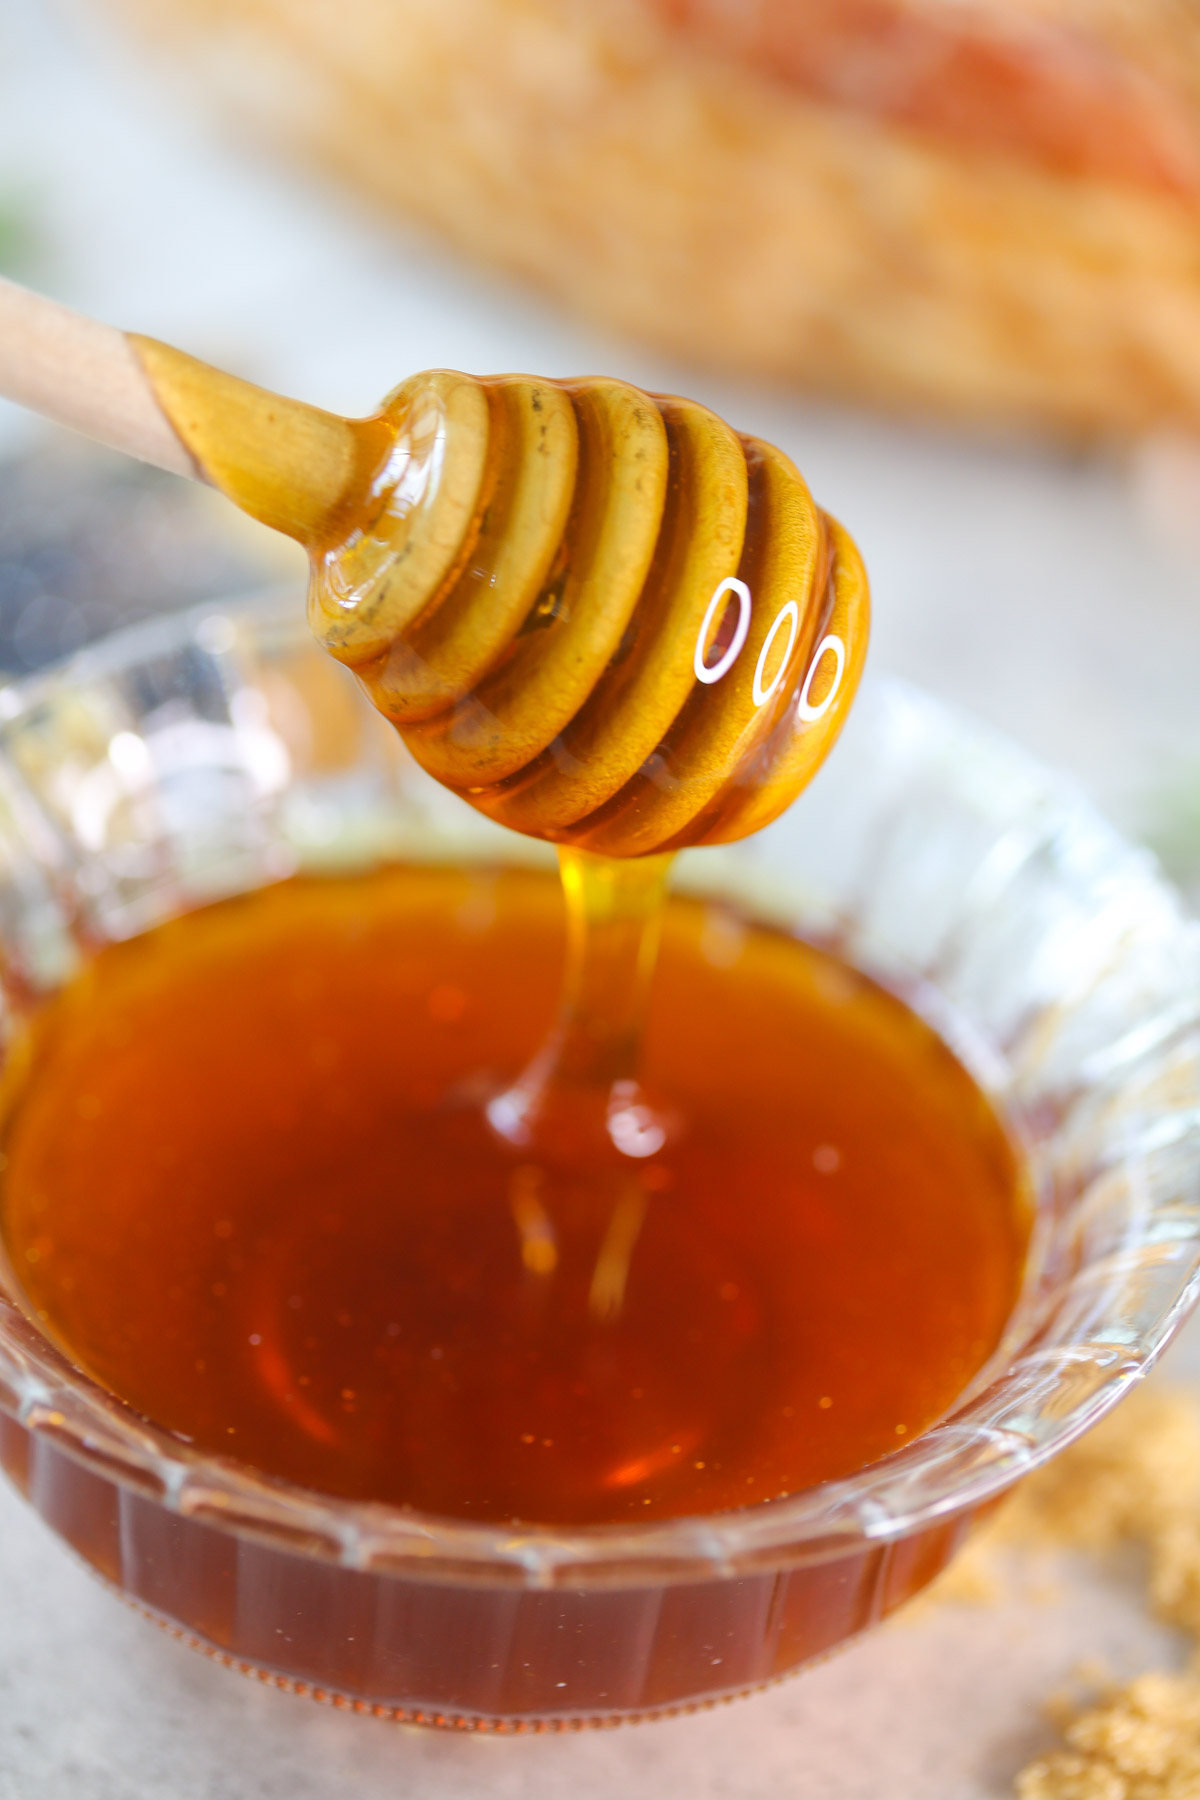 Drizzling honey